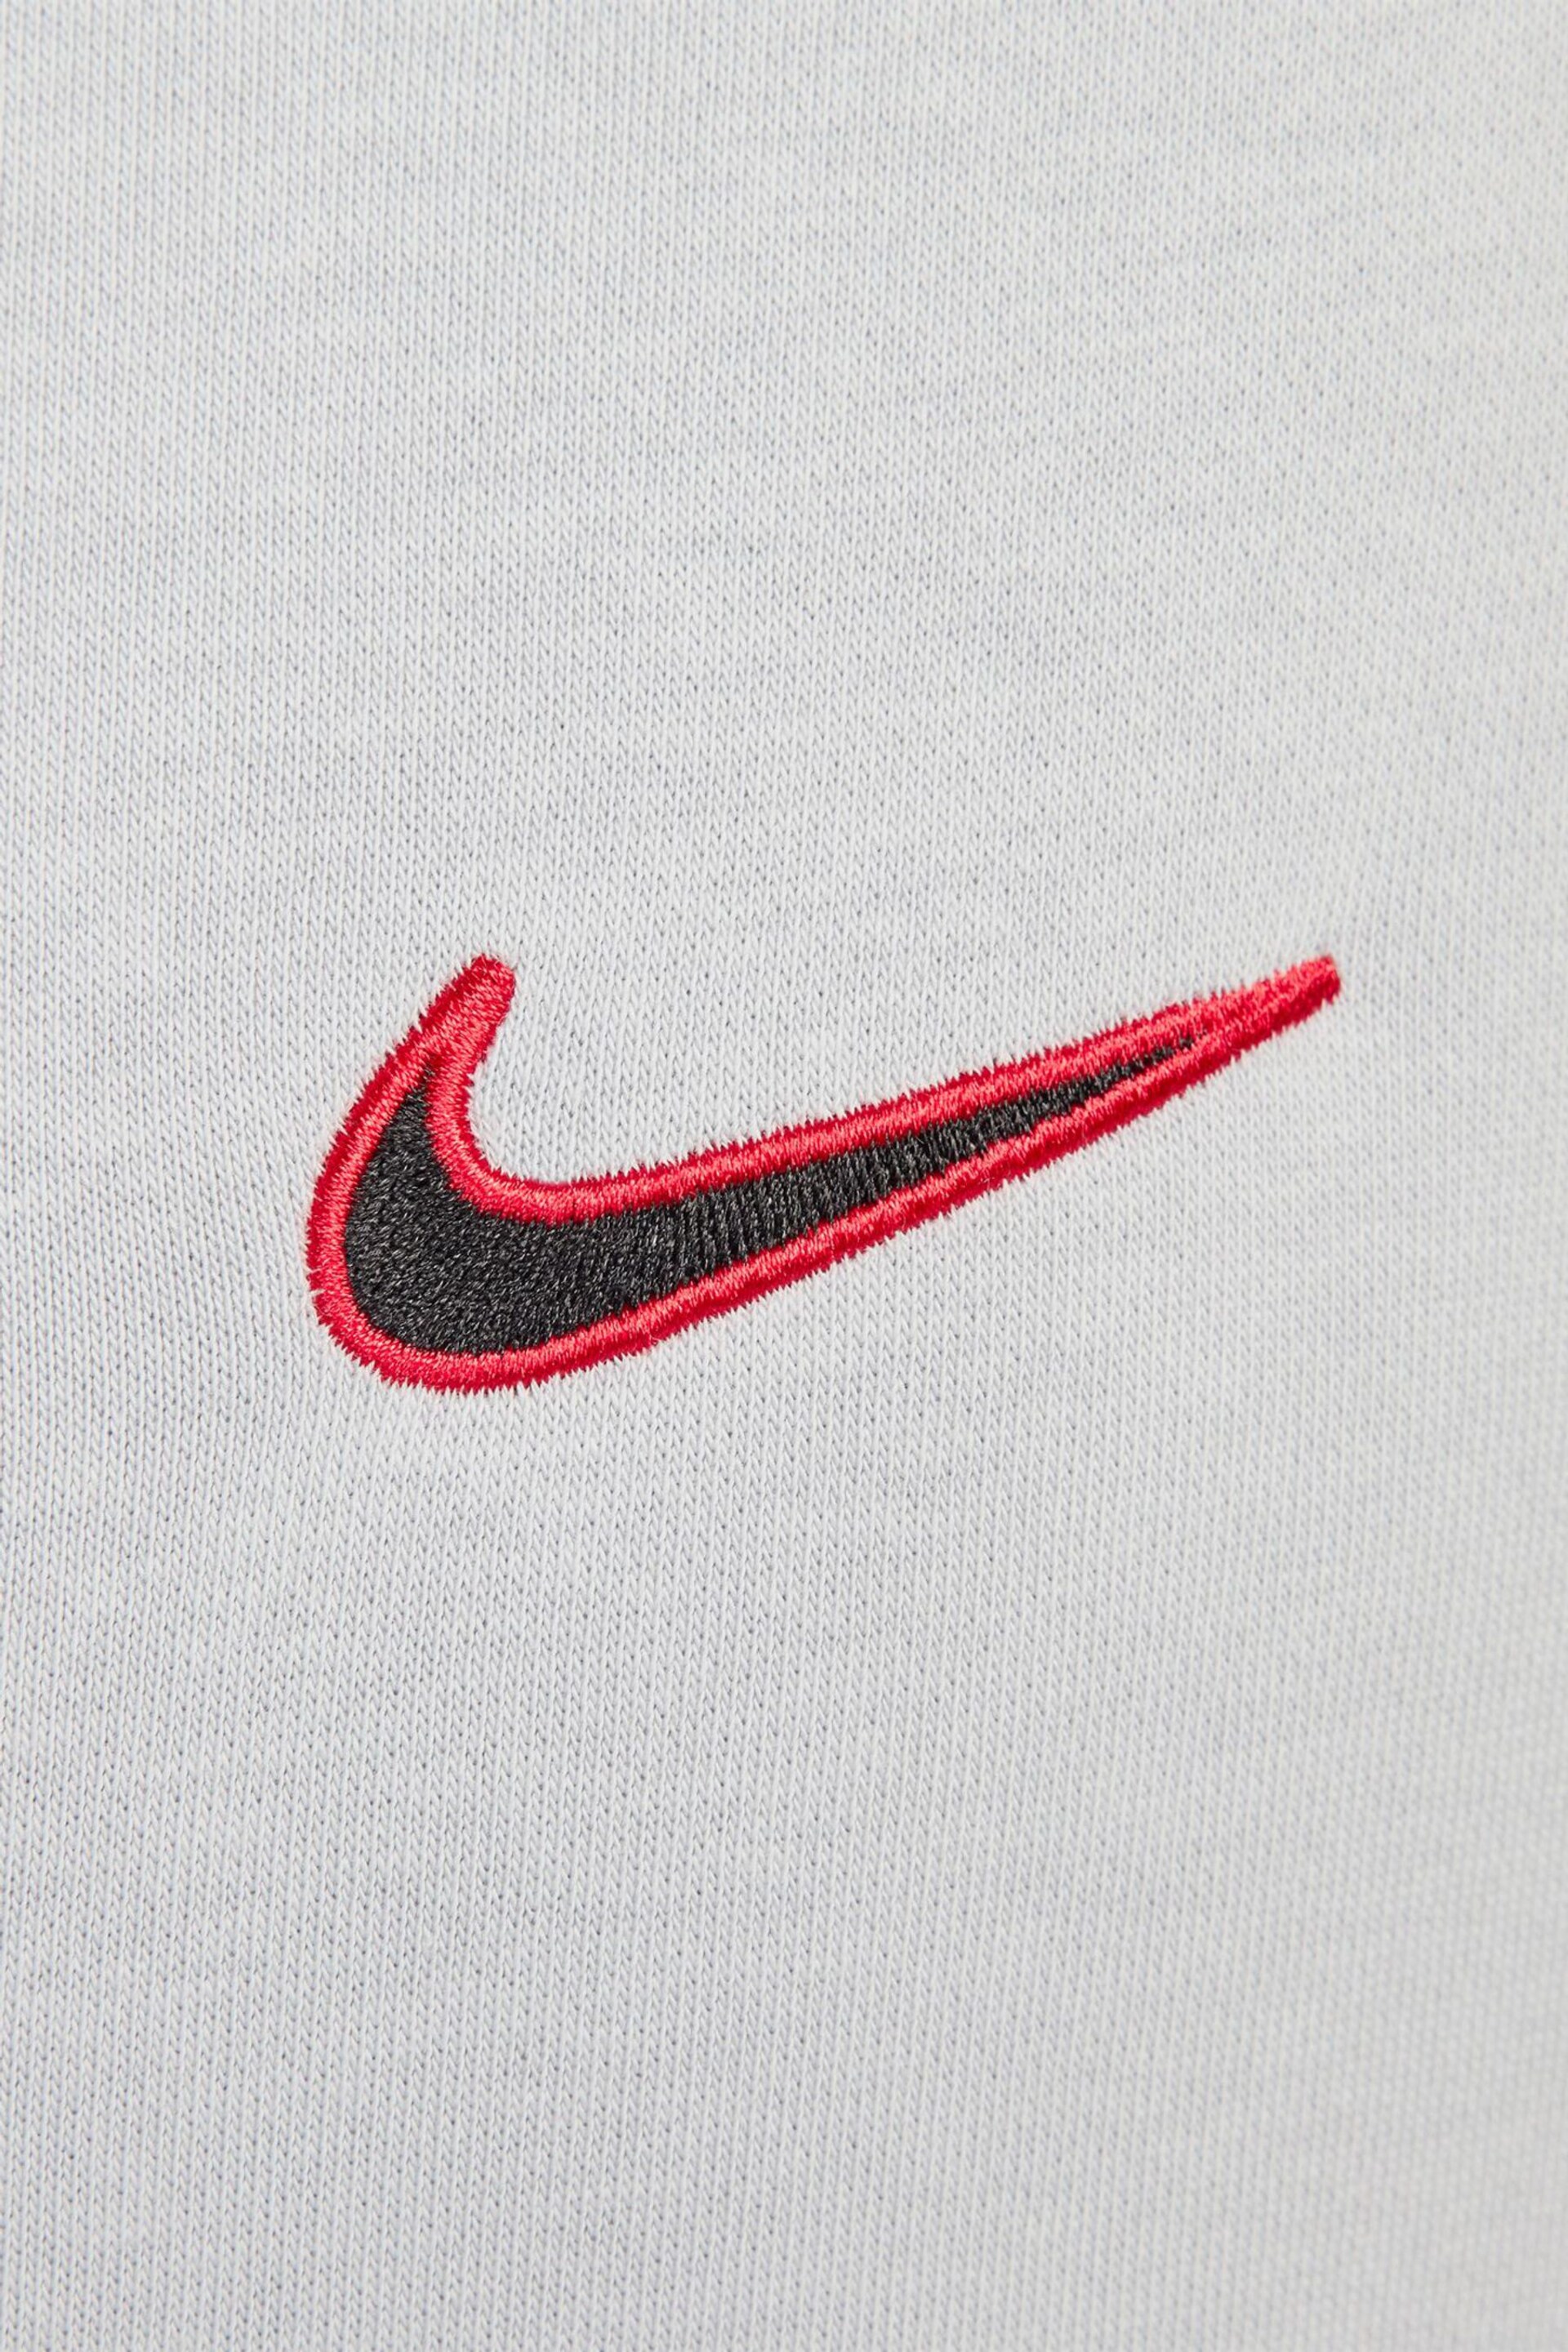 Nike Grey Sportswear Shoulder Blocking Hoodie - Image 7 of 7